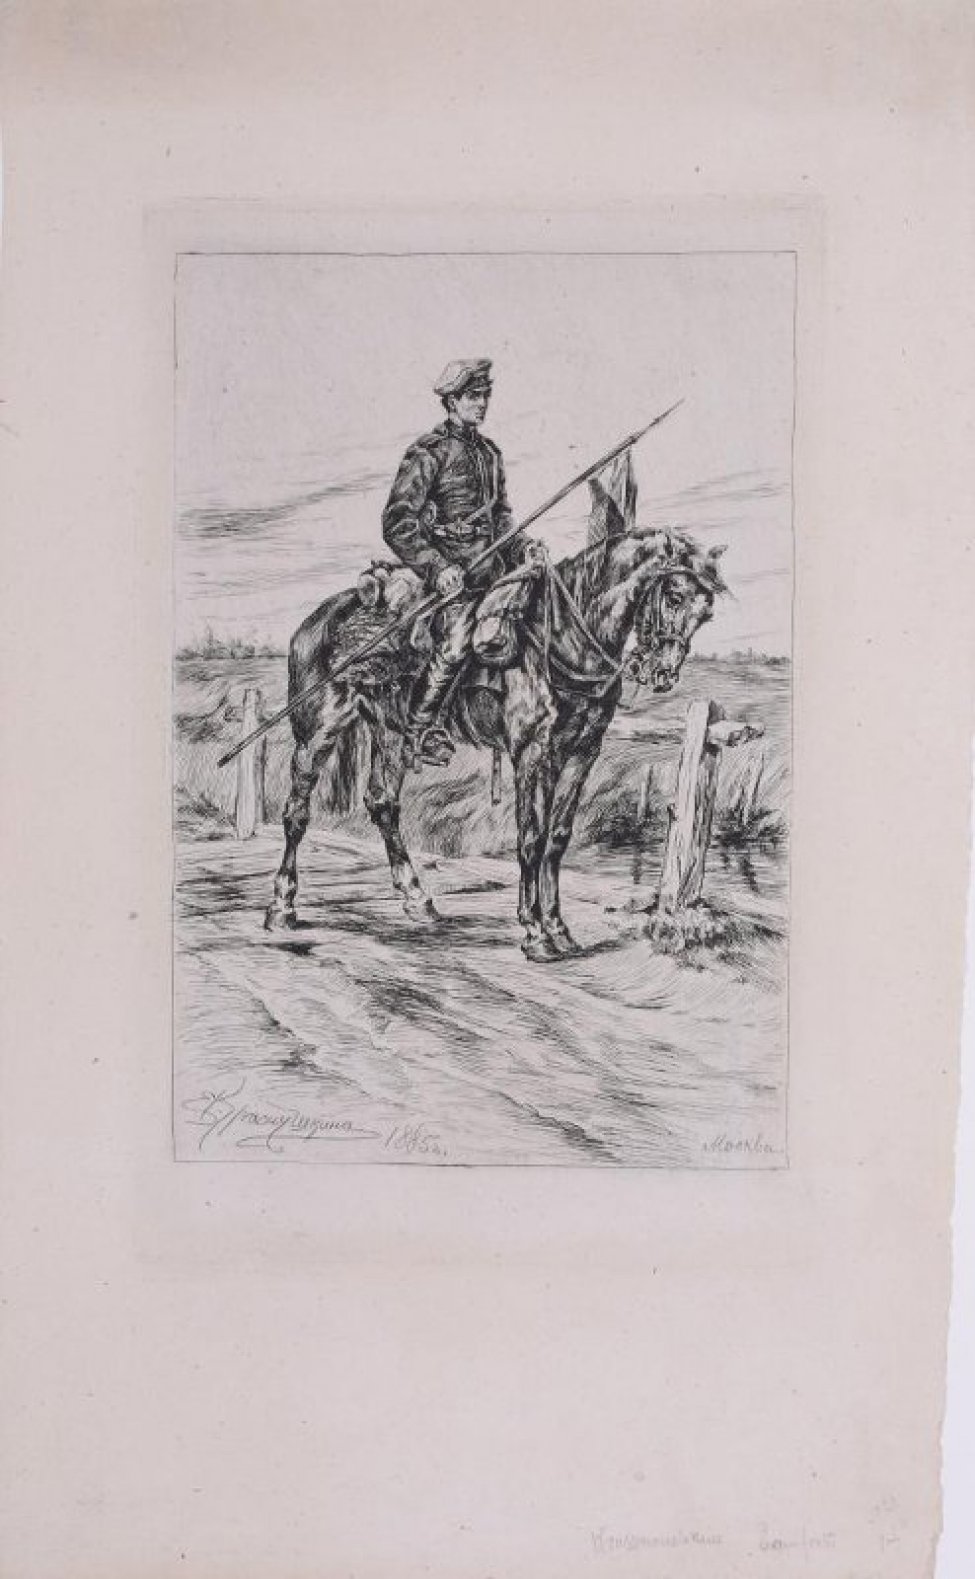 На фоне пейзажа всадник на коне с флагом в правой руке.